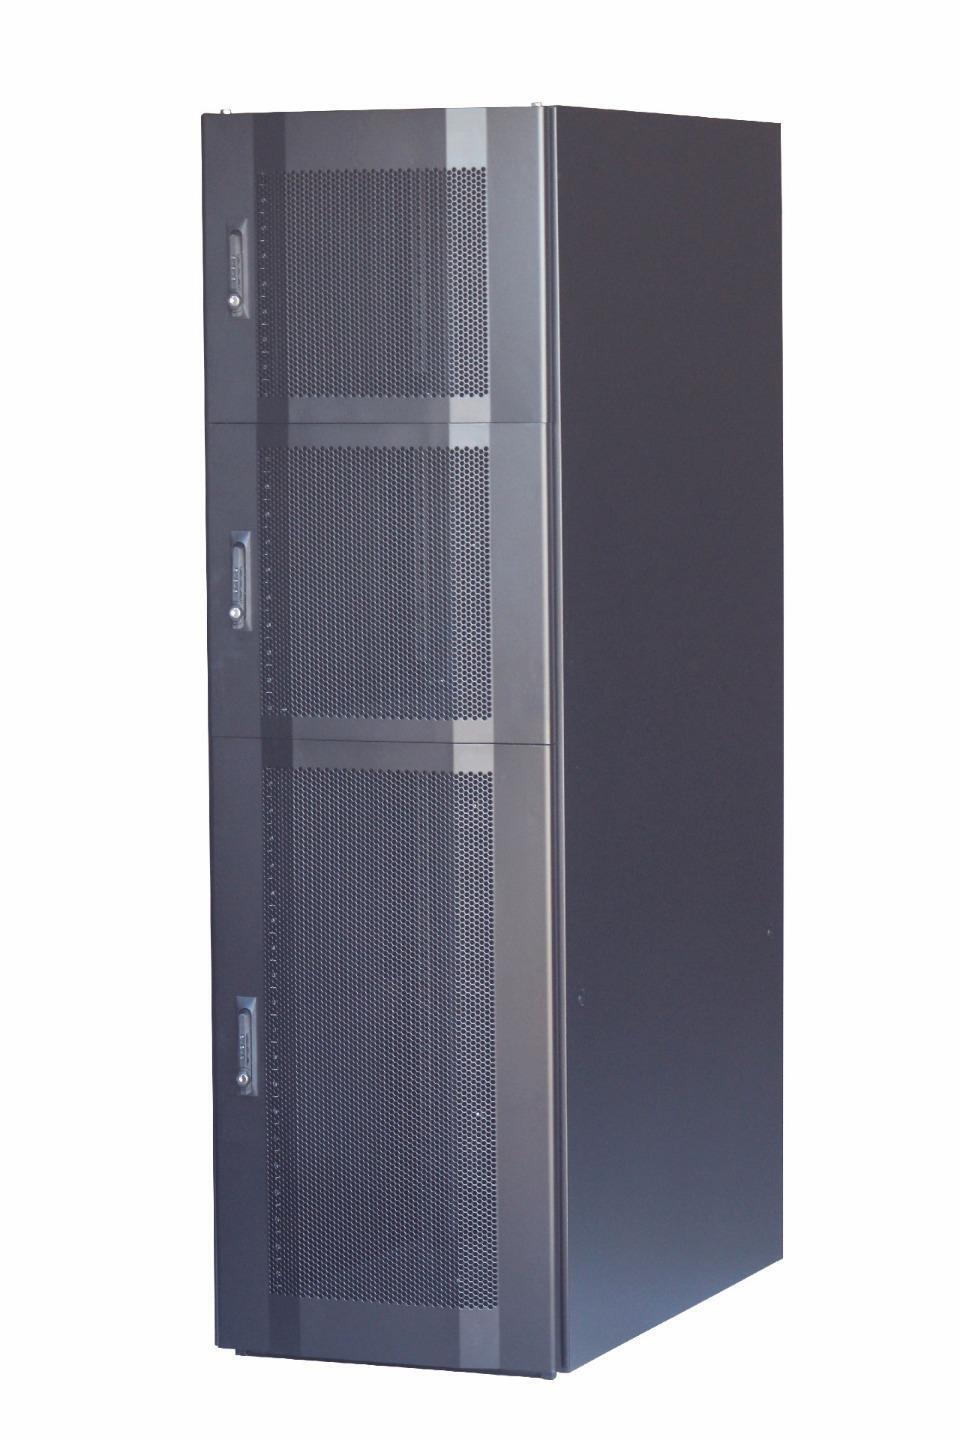 DSI 3 Compartment CoLocation Server Rack - DSI 1342AG2 CoLo w/Secure Cbl Runway